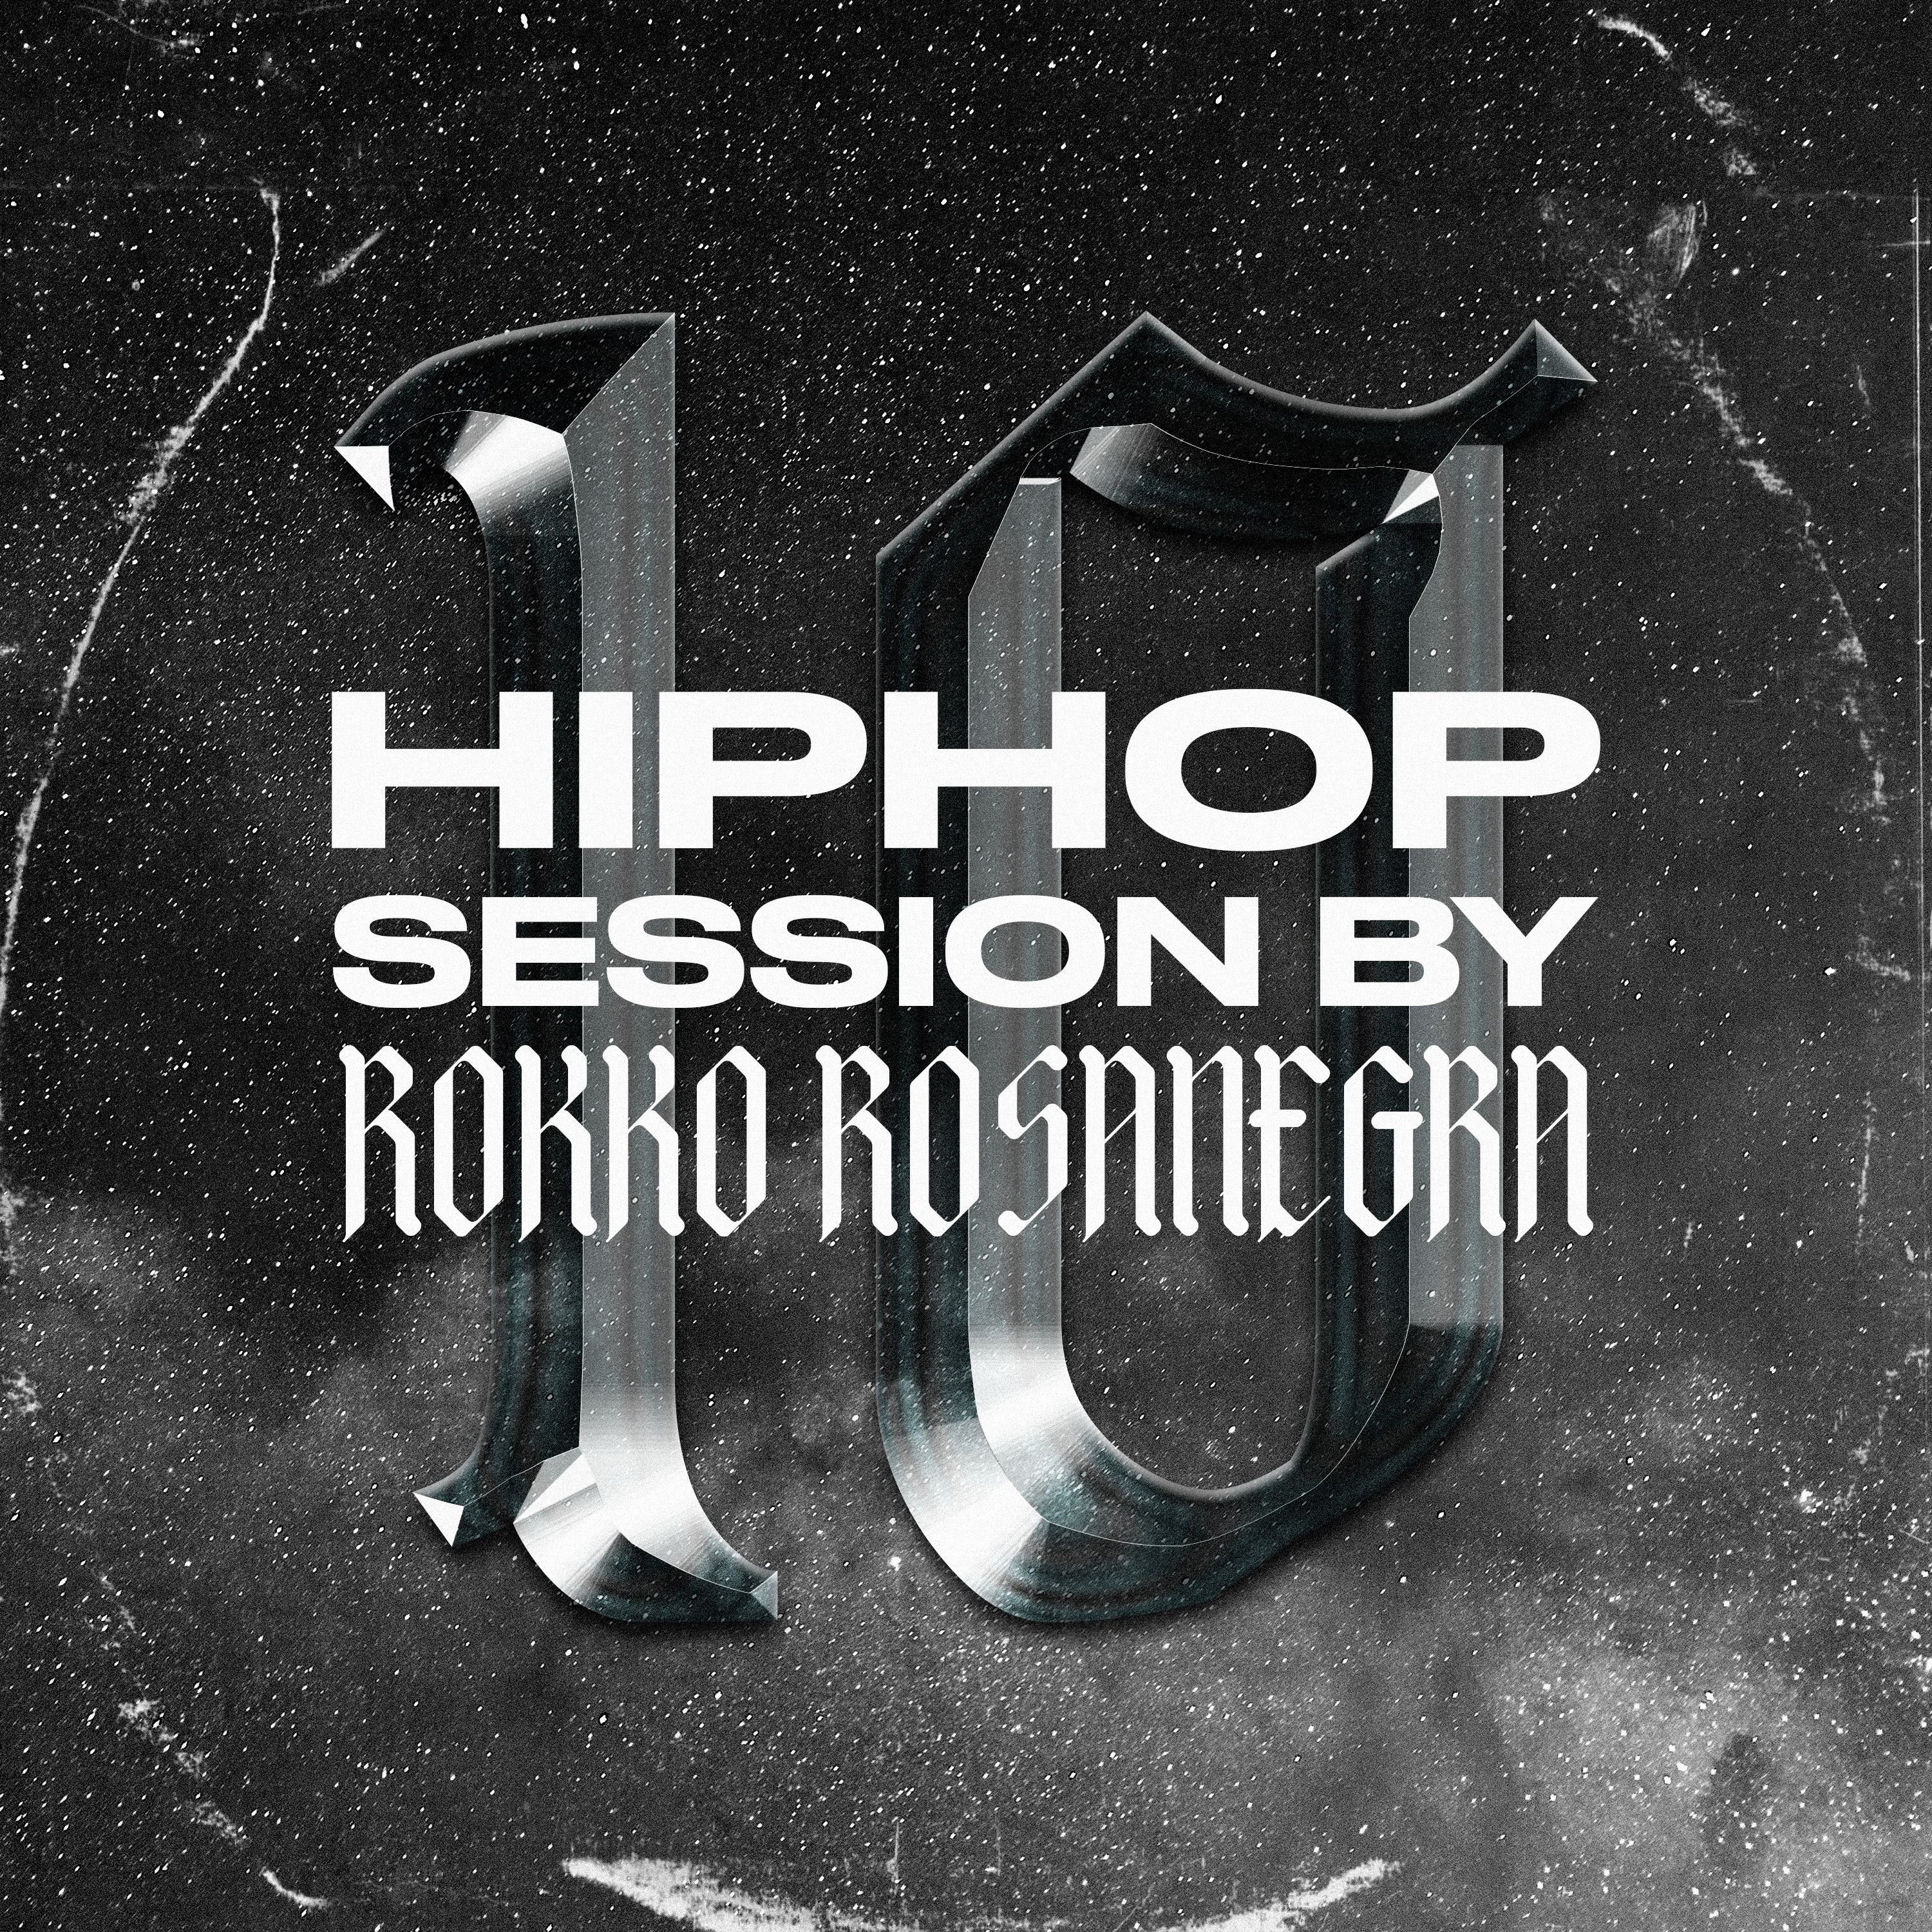 Ladata HIP HOP SESSION 10 (DJ ROKKO ROSANEGRA)